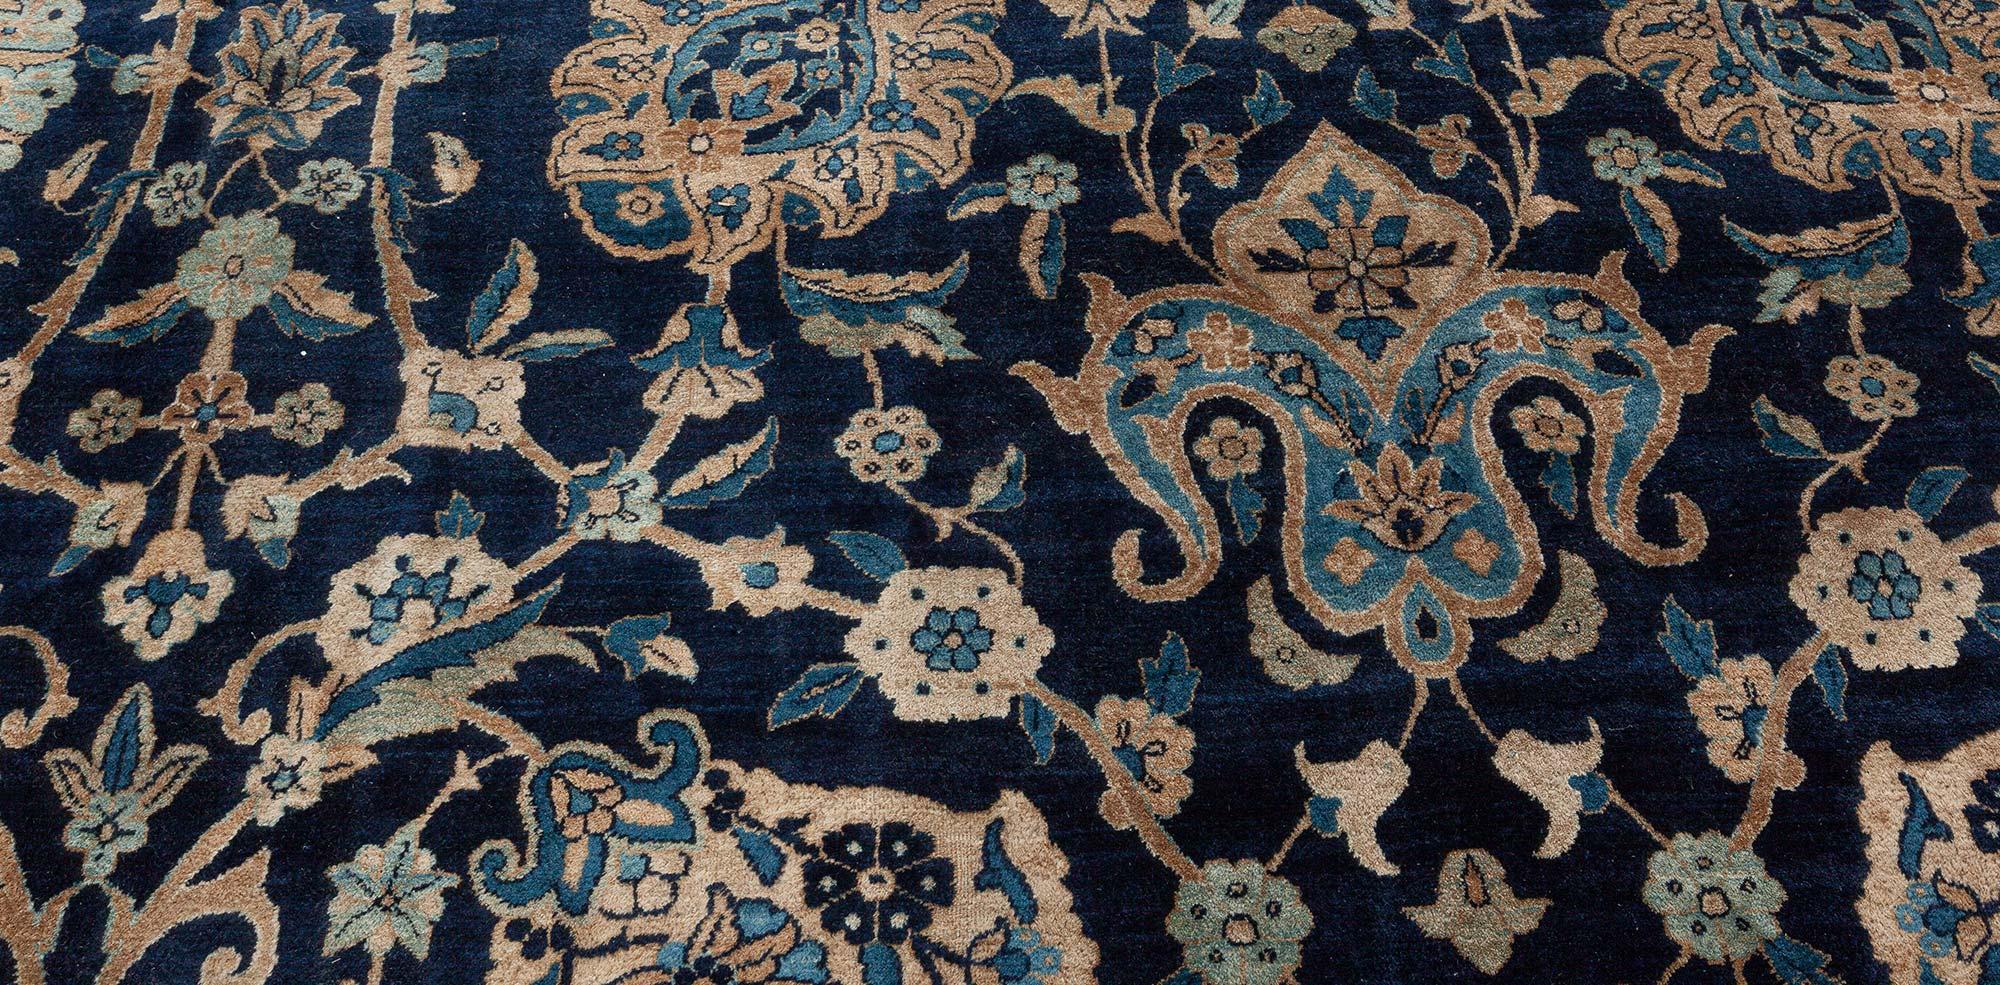 Antique Persian Kirman Brown, Blue Handmade Wool Rug
Size: 12'10